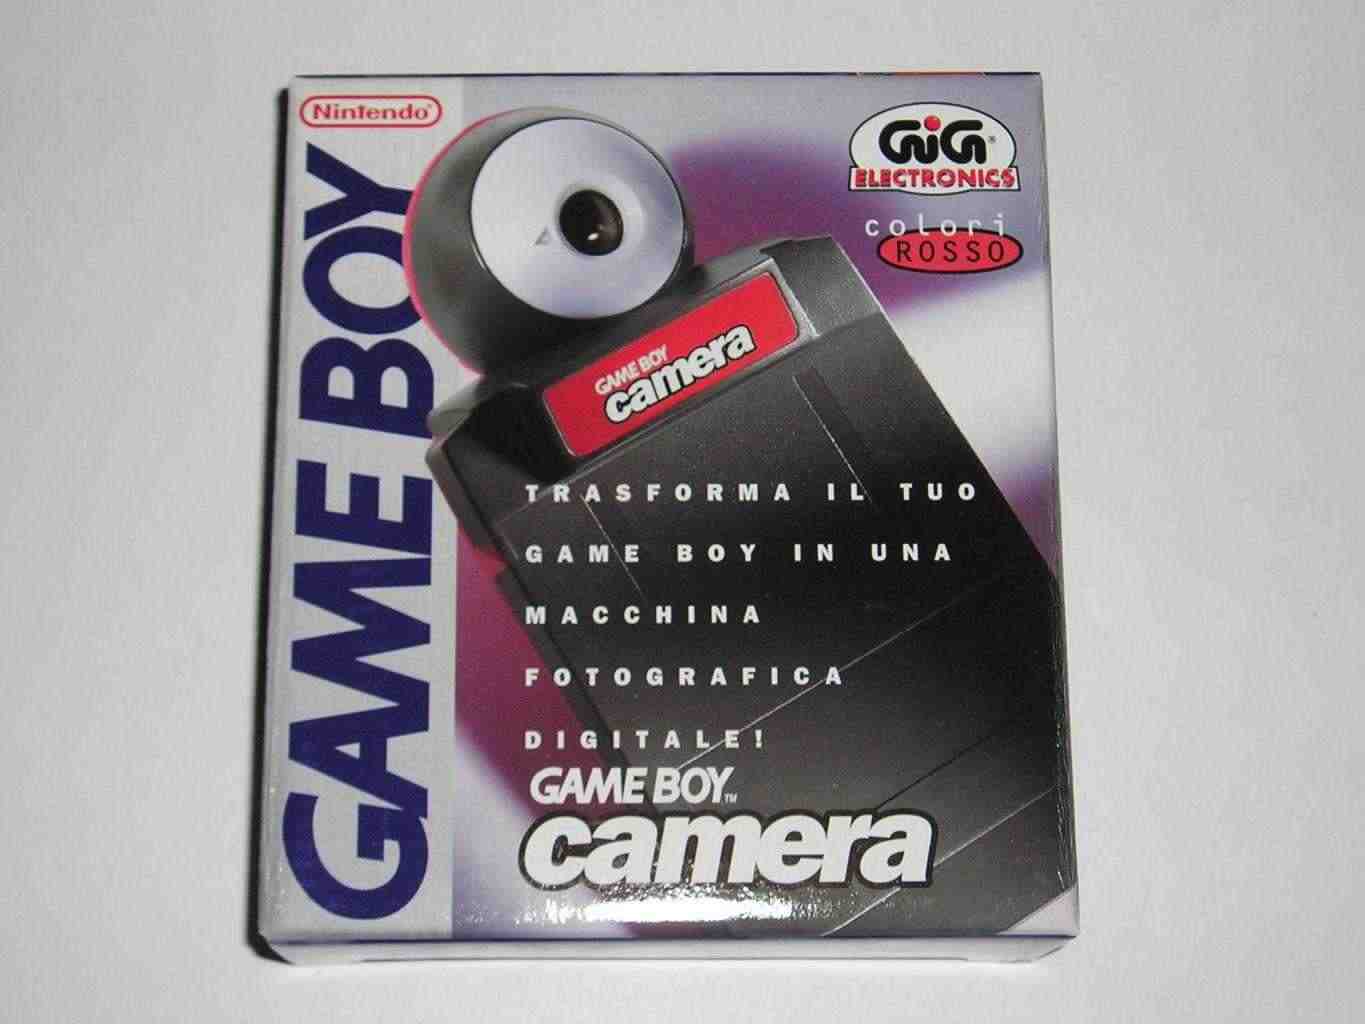 Game boy camera nintendo